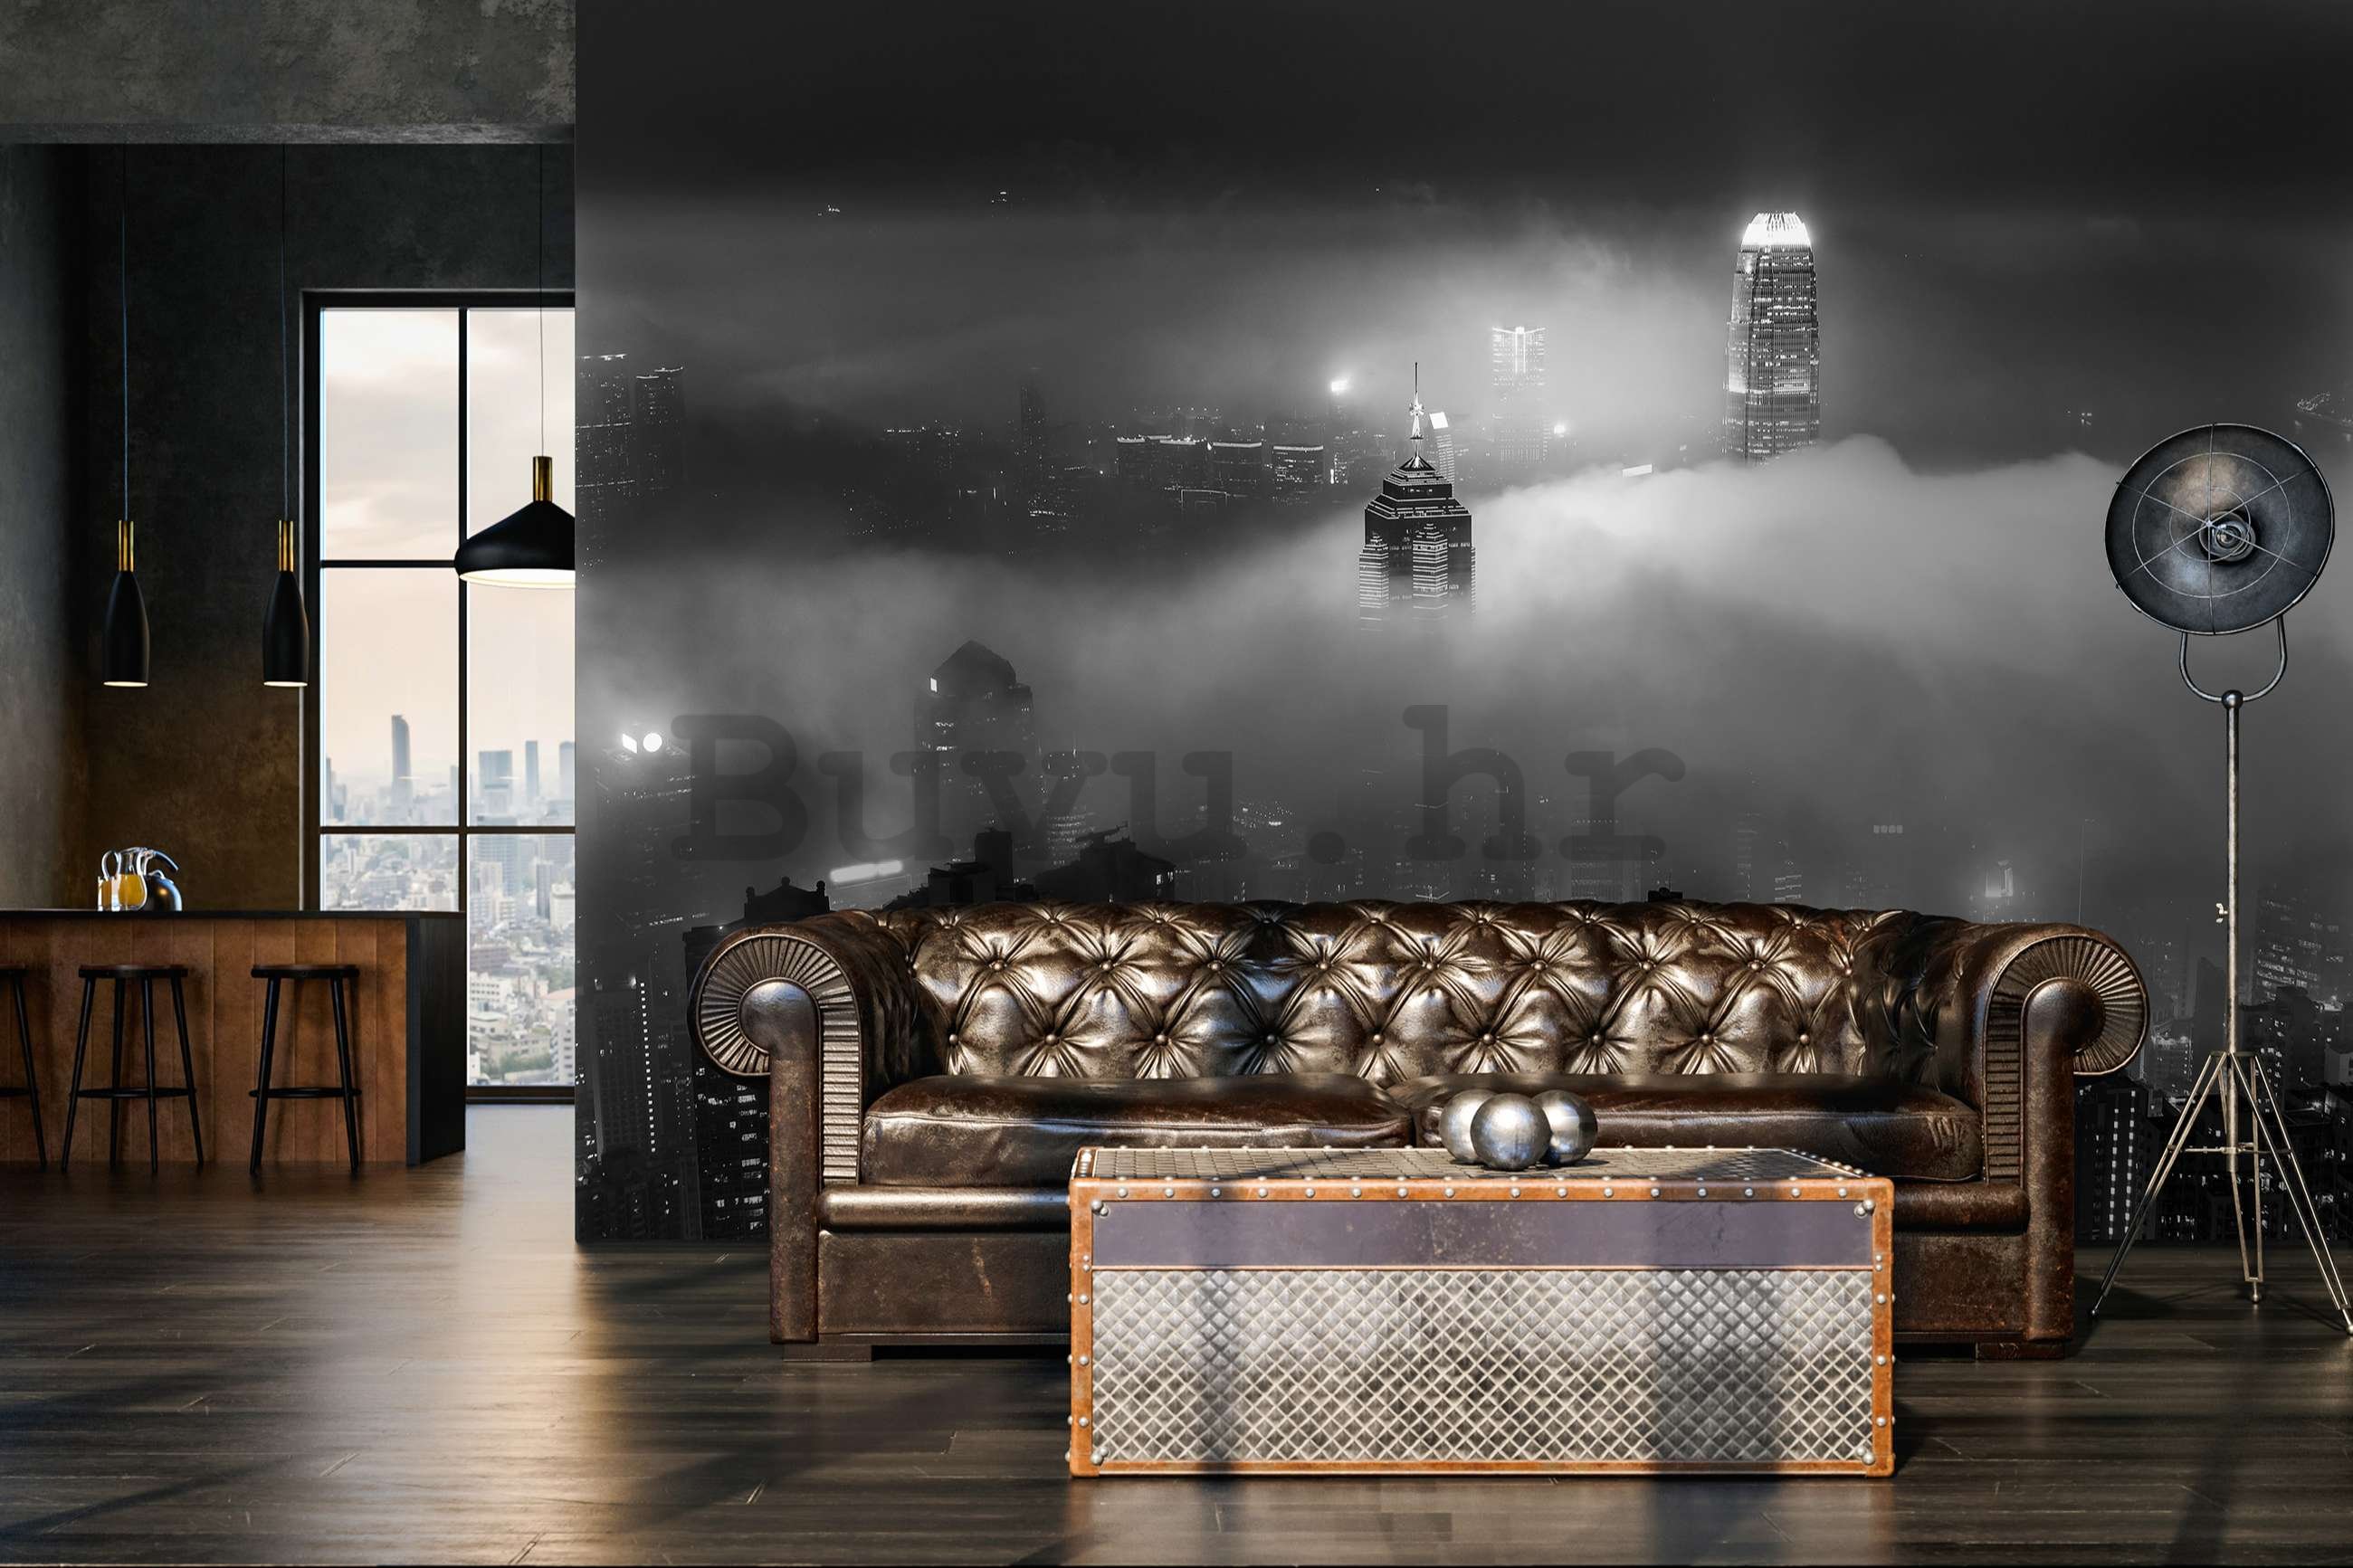 Foto tapeta Vlies: Noćni grad u magli (crno-bijelo) - 254x184 cm